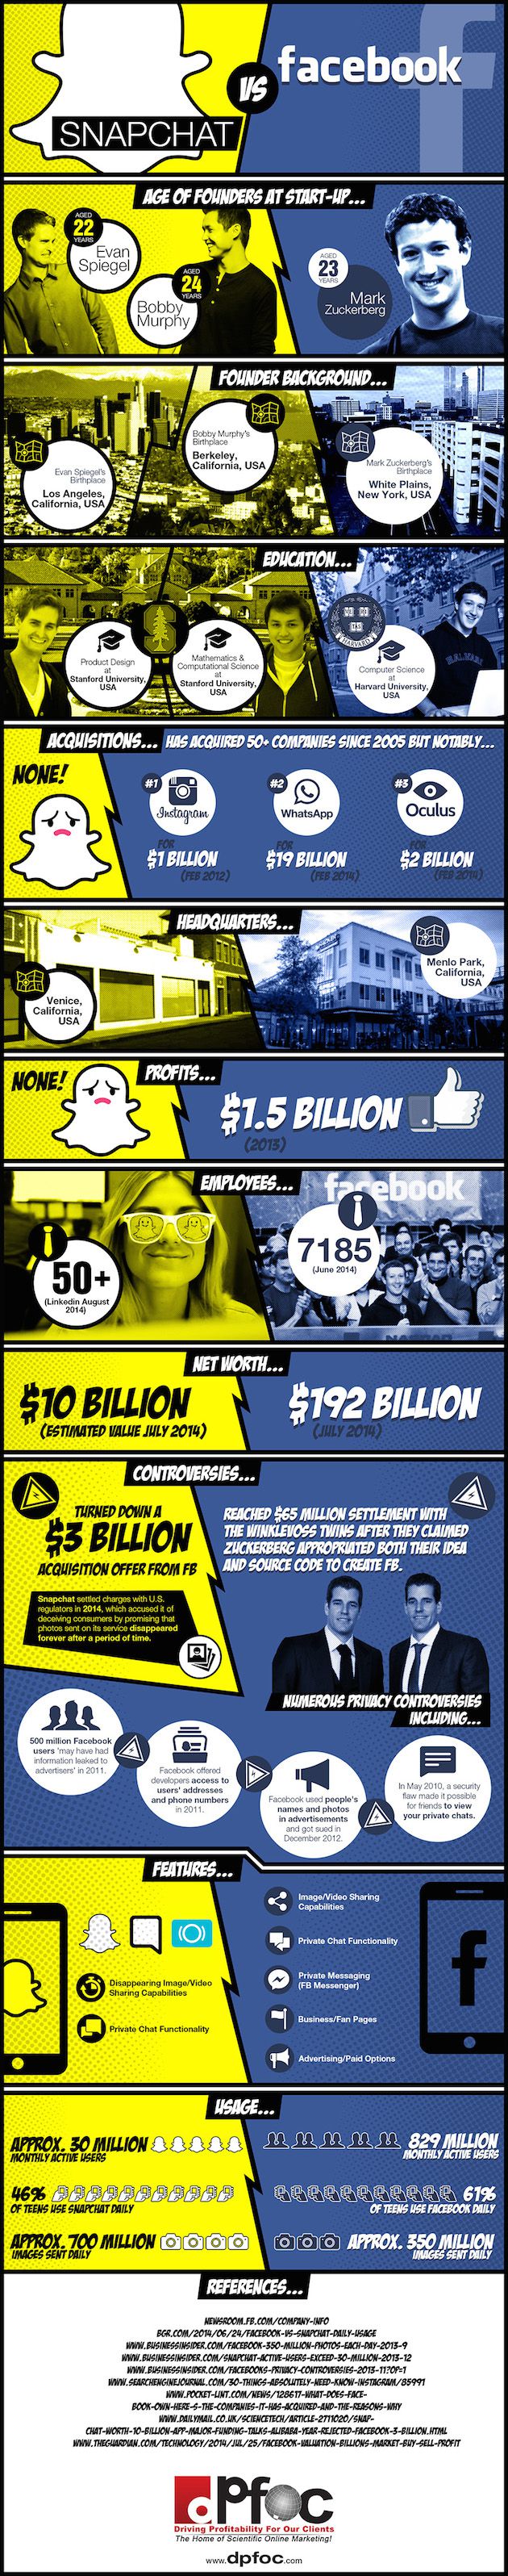 Snapchat-Vs-Facebook-Infographic